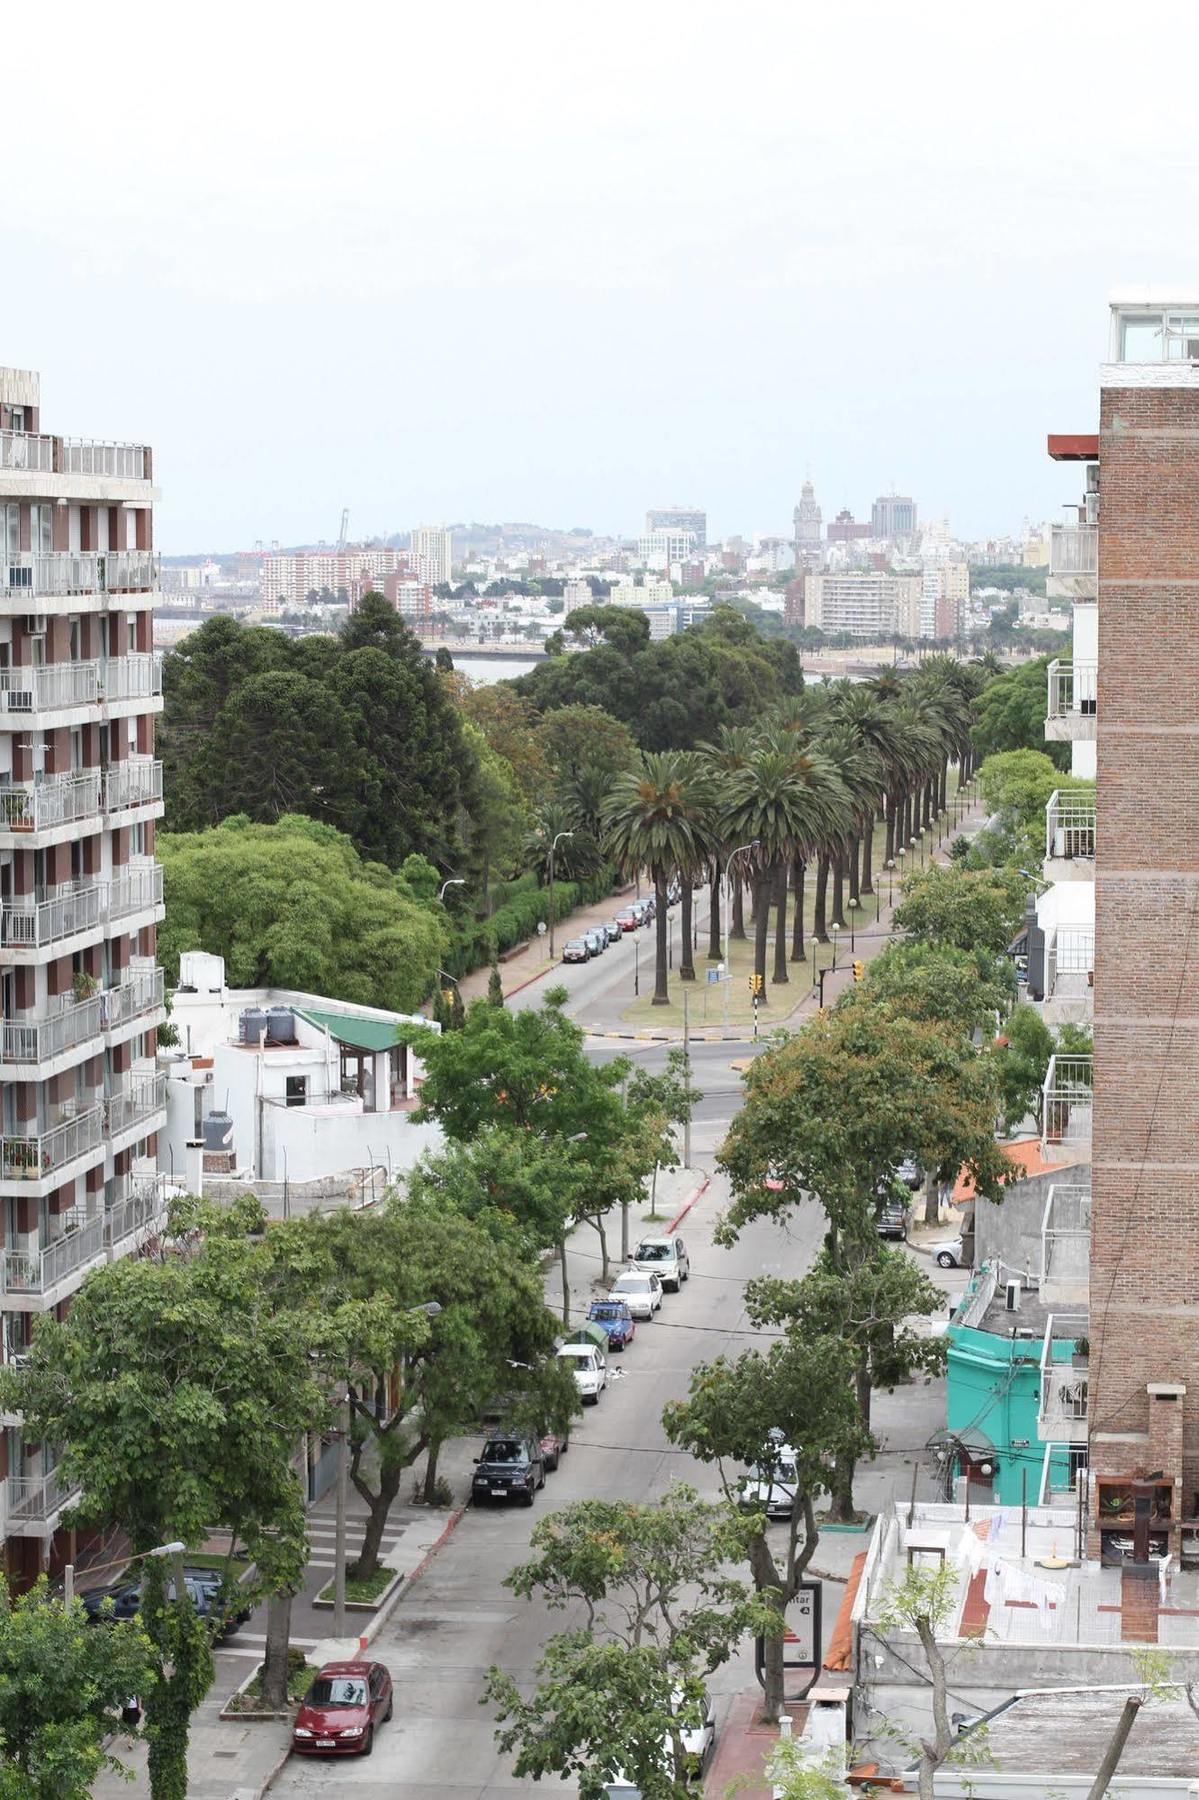 Regency Golf - Hotel Urbano Montevideo Exterior photo